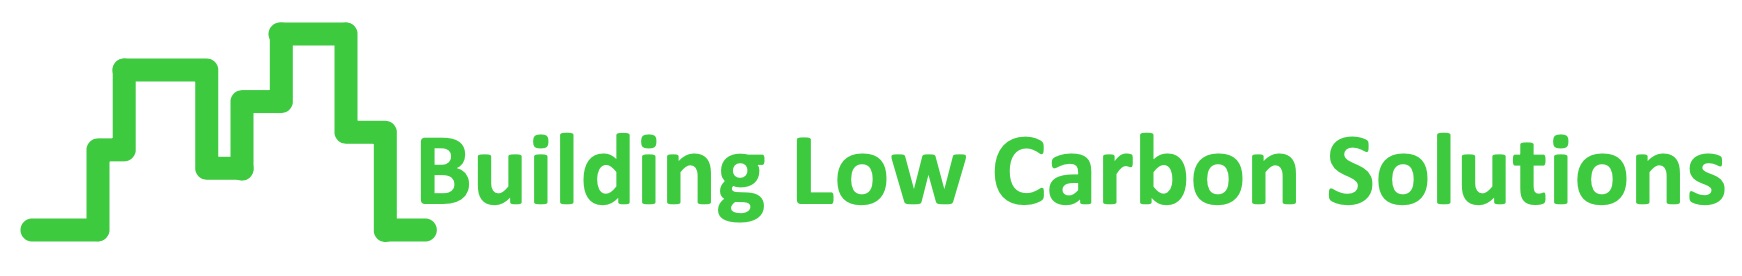 Building Low Carbon Solutions logo